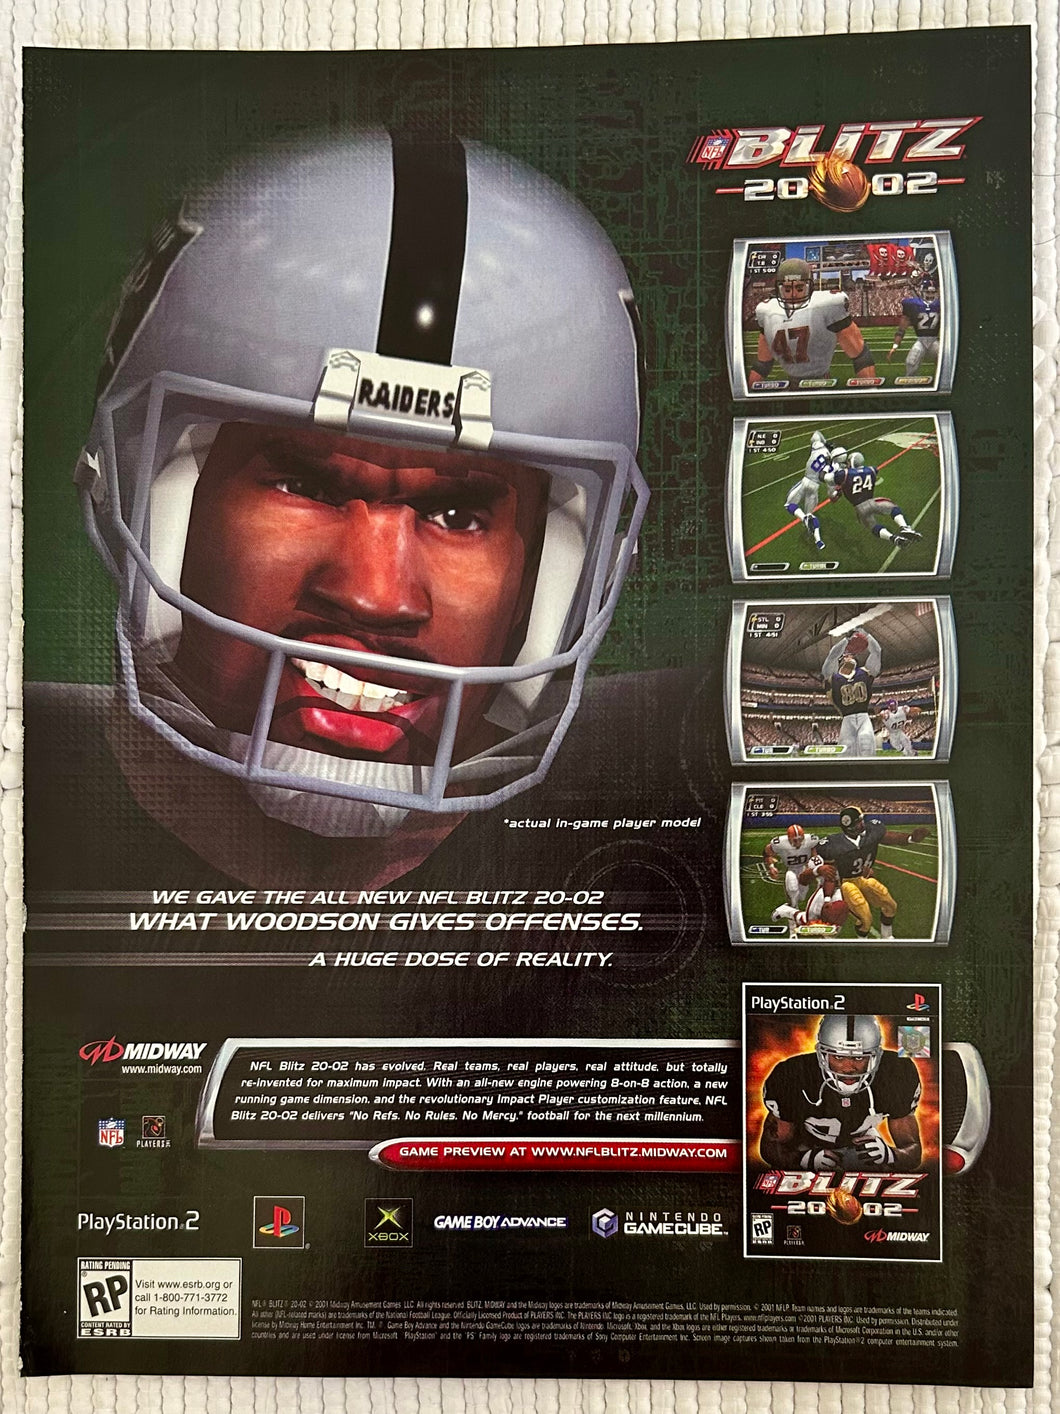 NFL Blitz 2002 - PS2 Xbox NGC GBA - Original Vintage Advertisement - Print Ads - Laminated A4 Poster